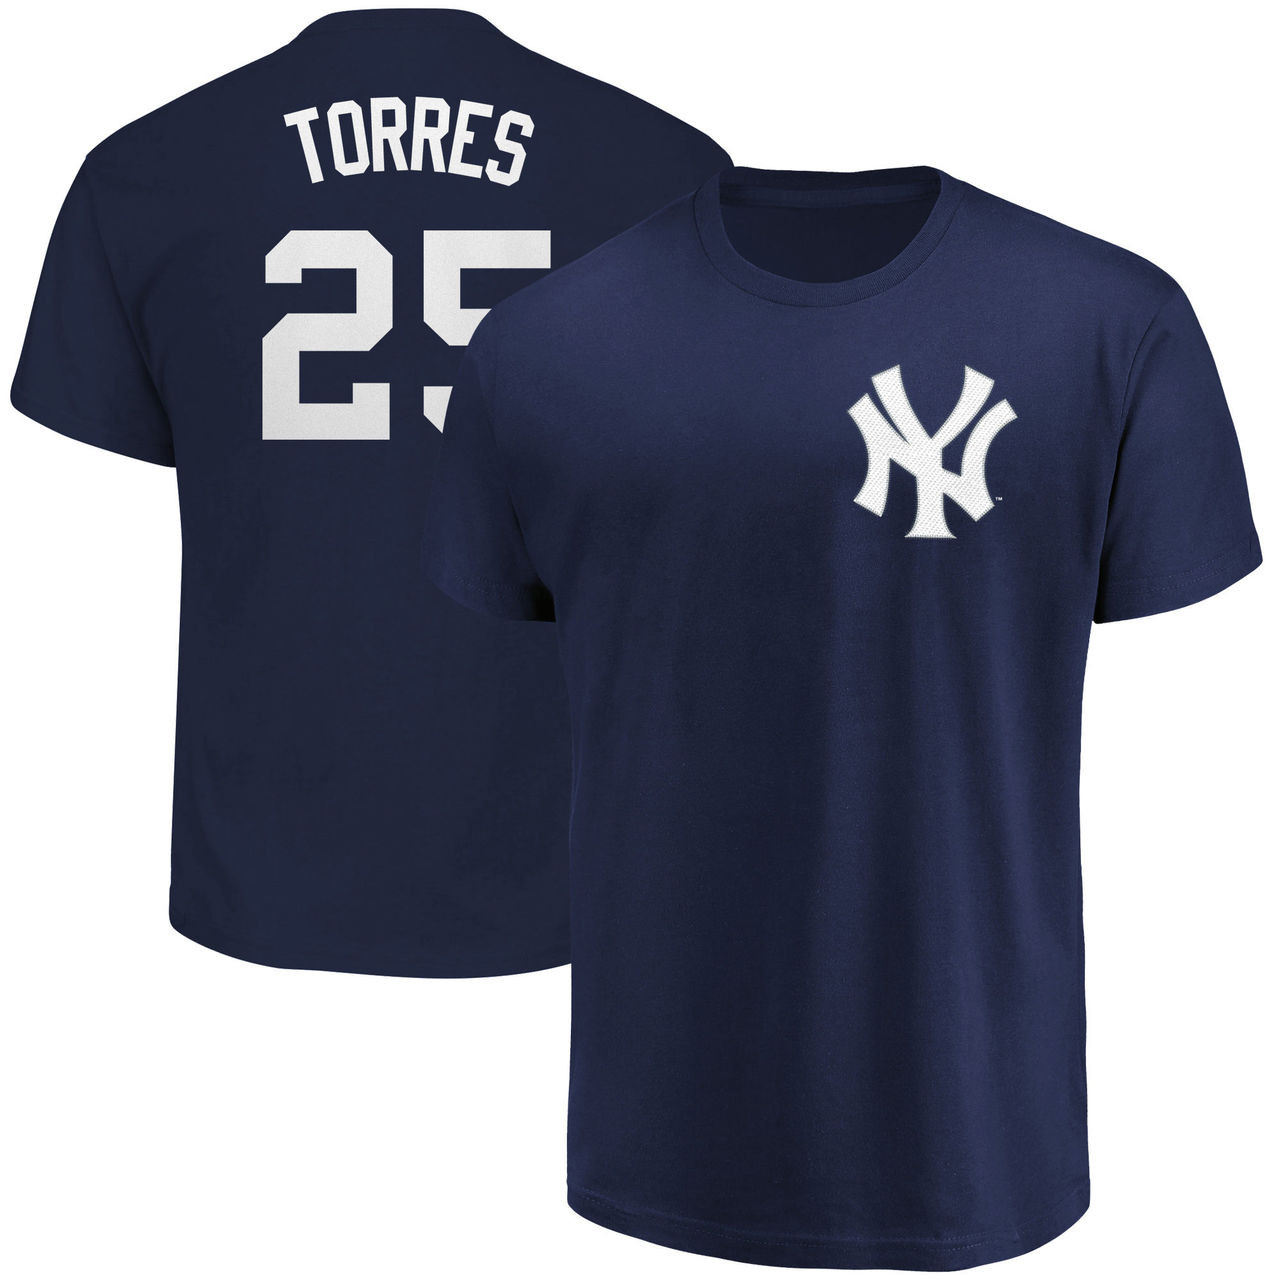 Gleyber Torres Youth T-Shirt - Navy NY Yankees Kids T-Shirt